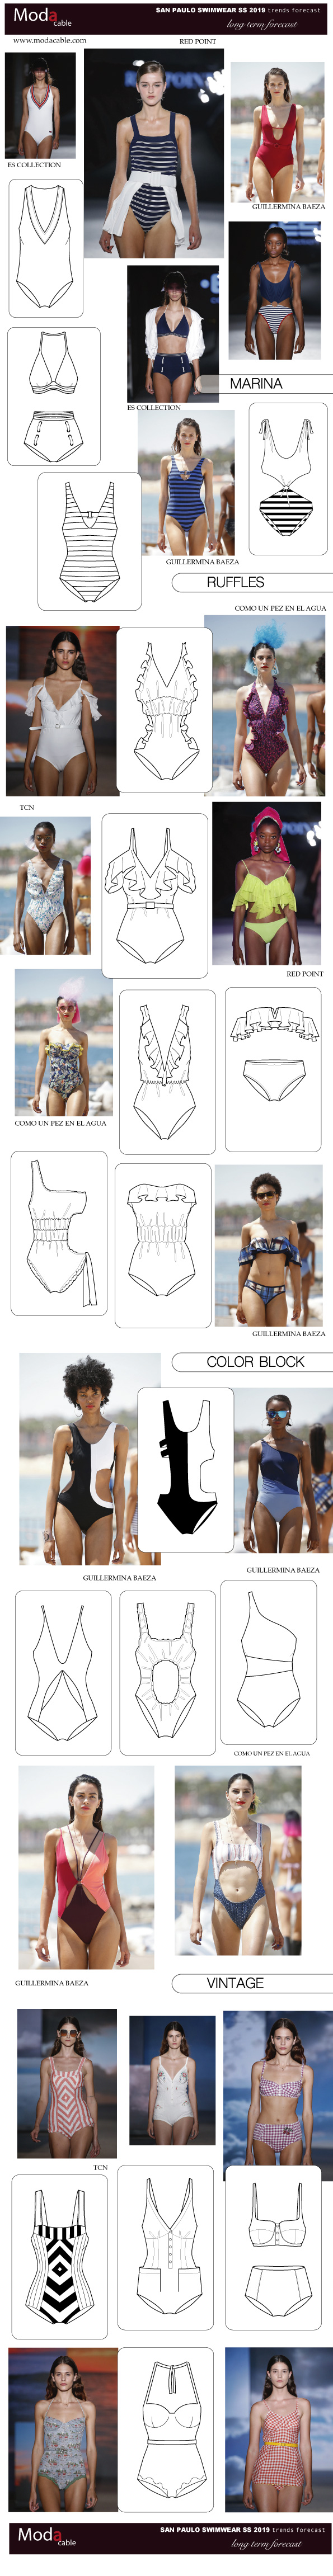 SS24 swimwear Thin line - ModaCable